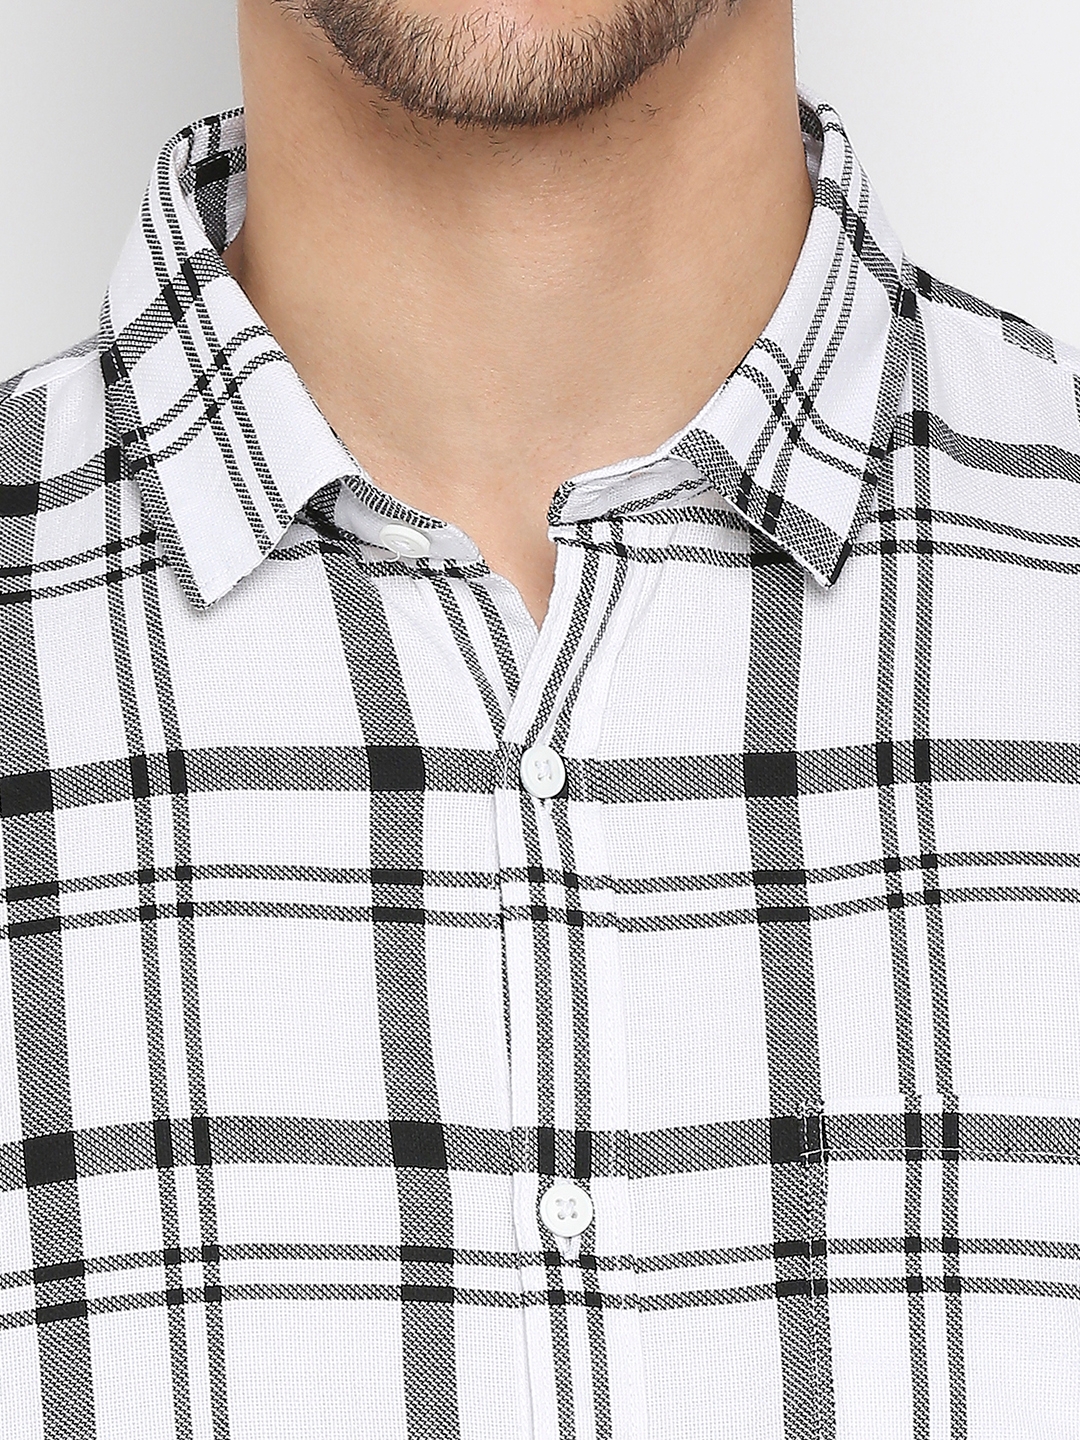 spykar | Men's White Cotton Checked Casual Shirts 4